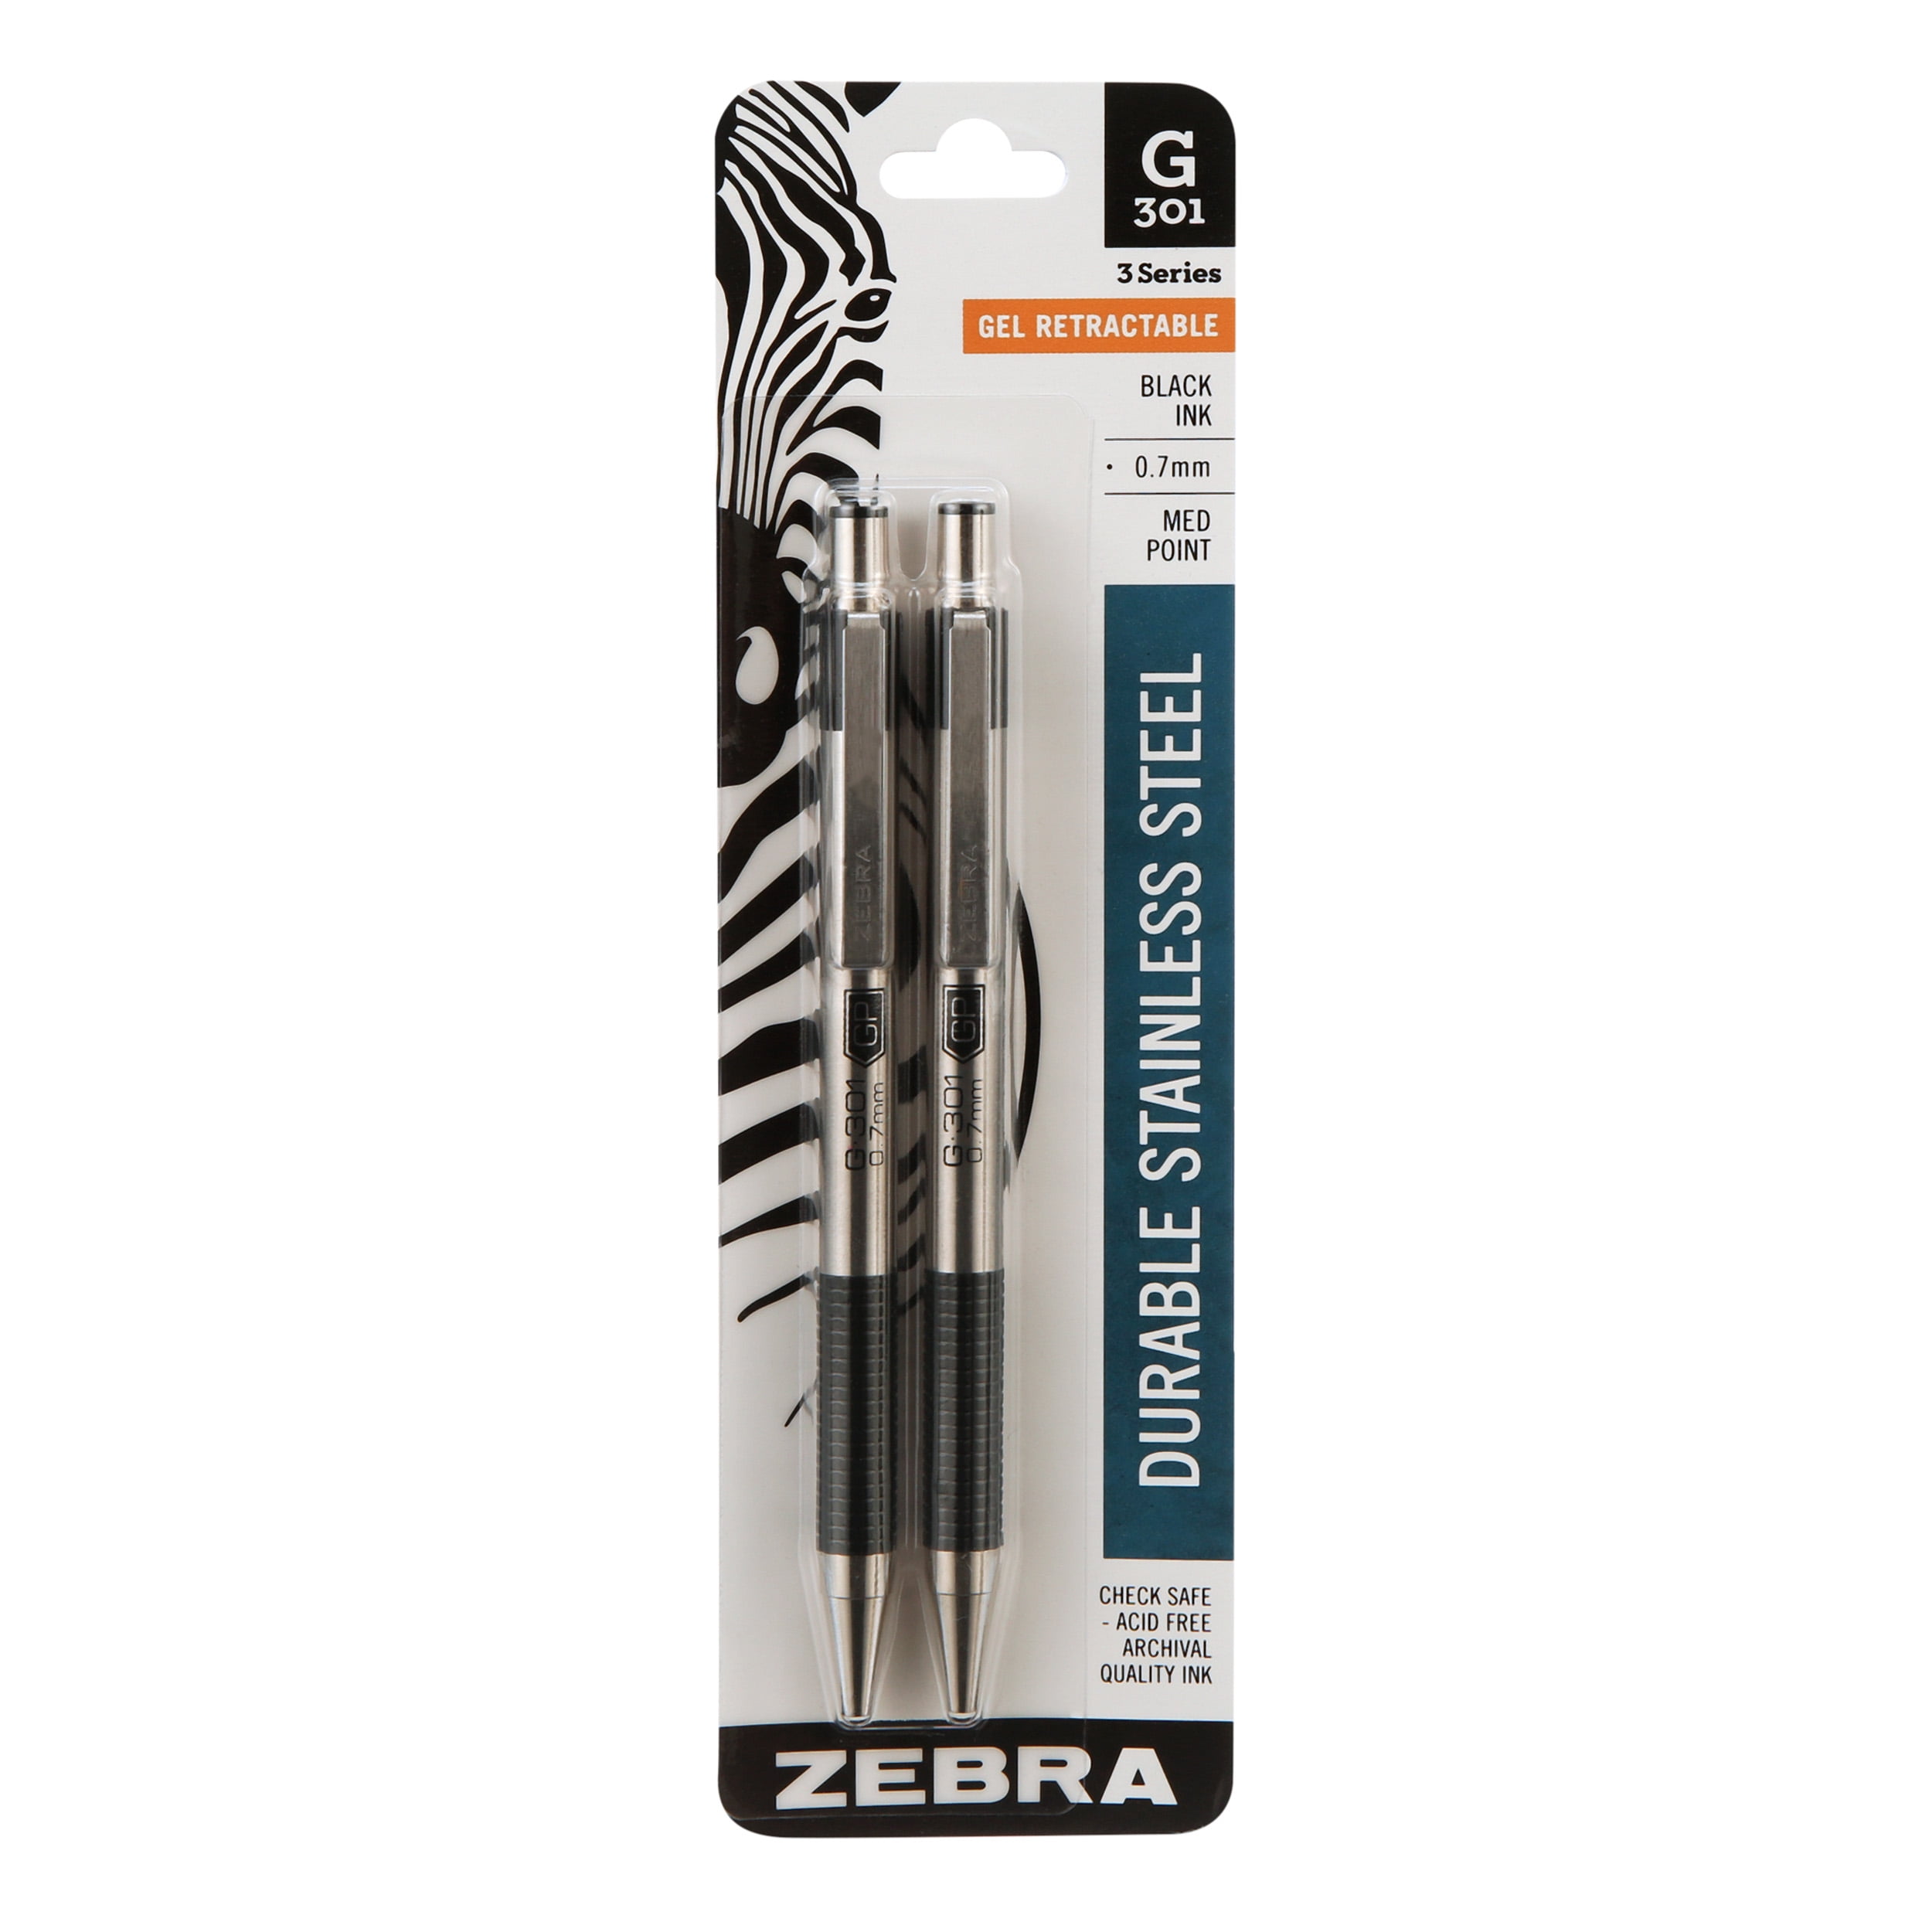 VEAREAR 6Pcs Writing Pen Comfortable Grip Smooth Writing Black Ink Push  Type Signature Gel Pen School Supplies